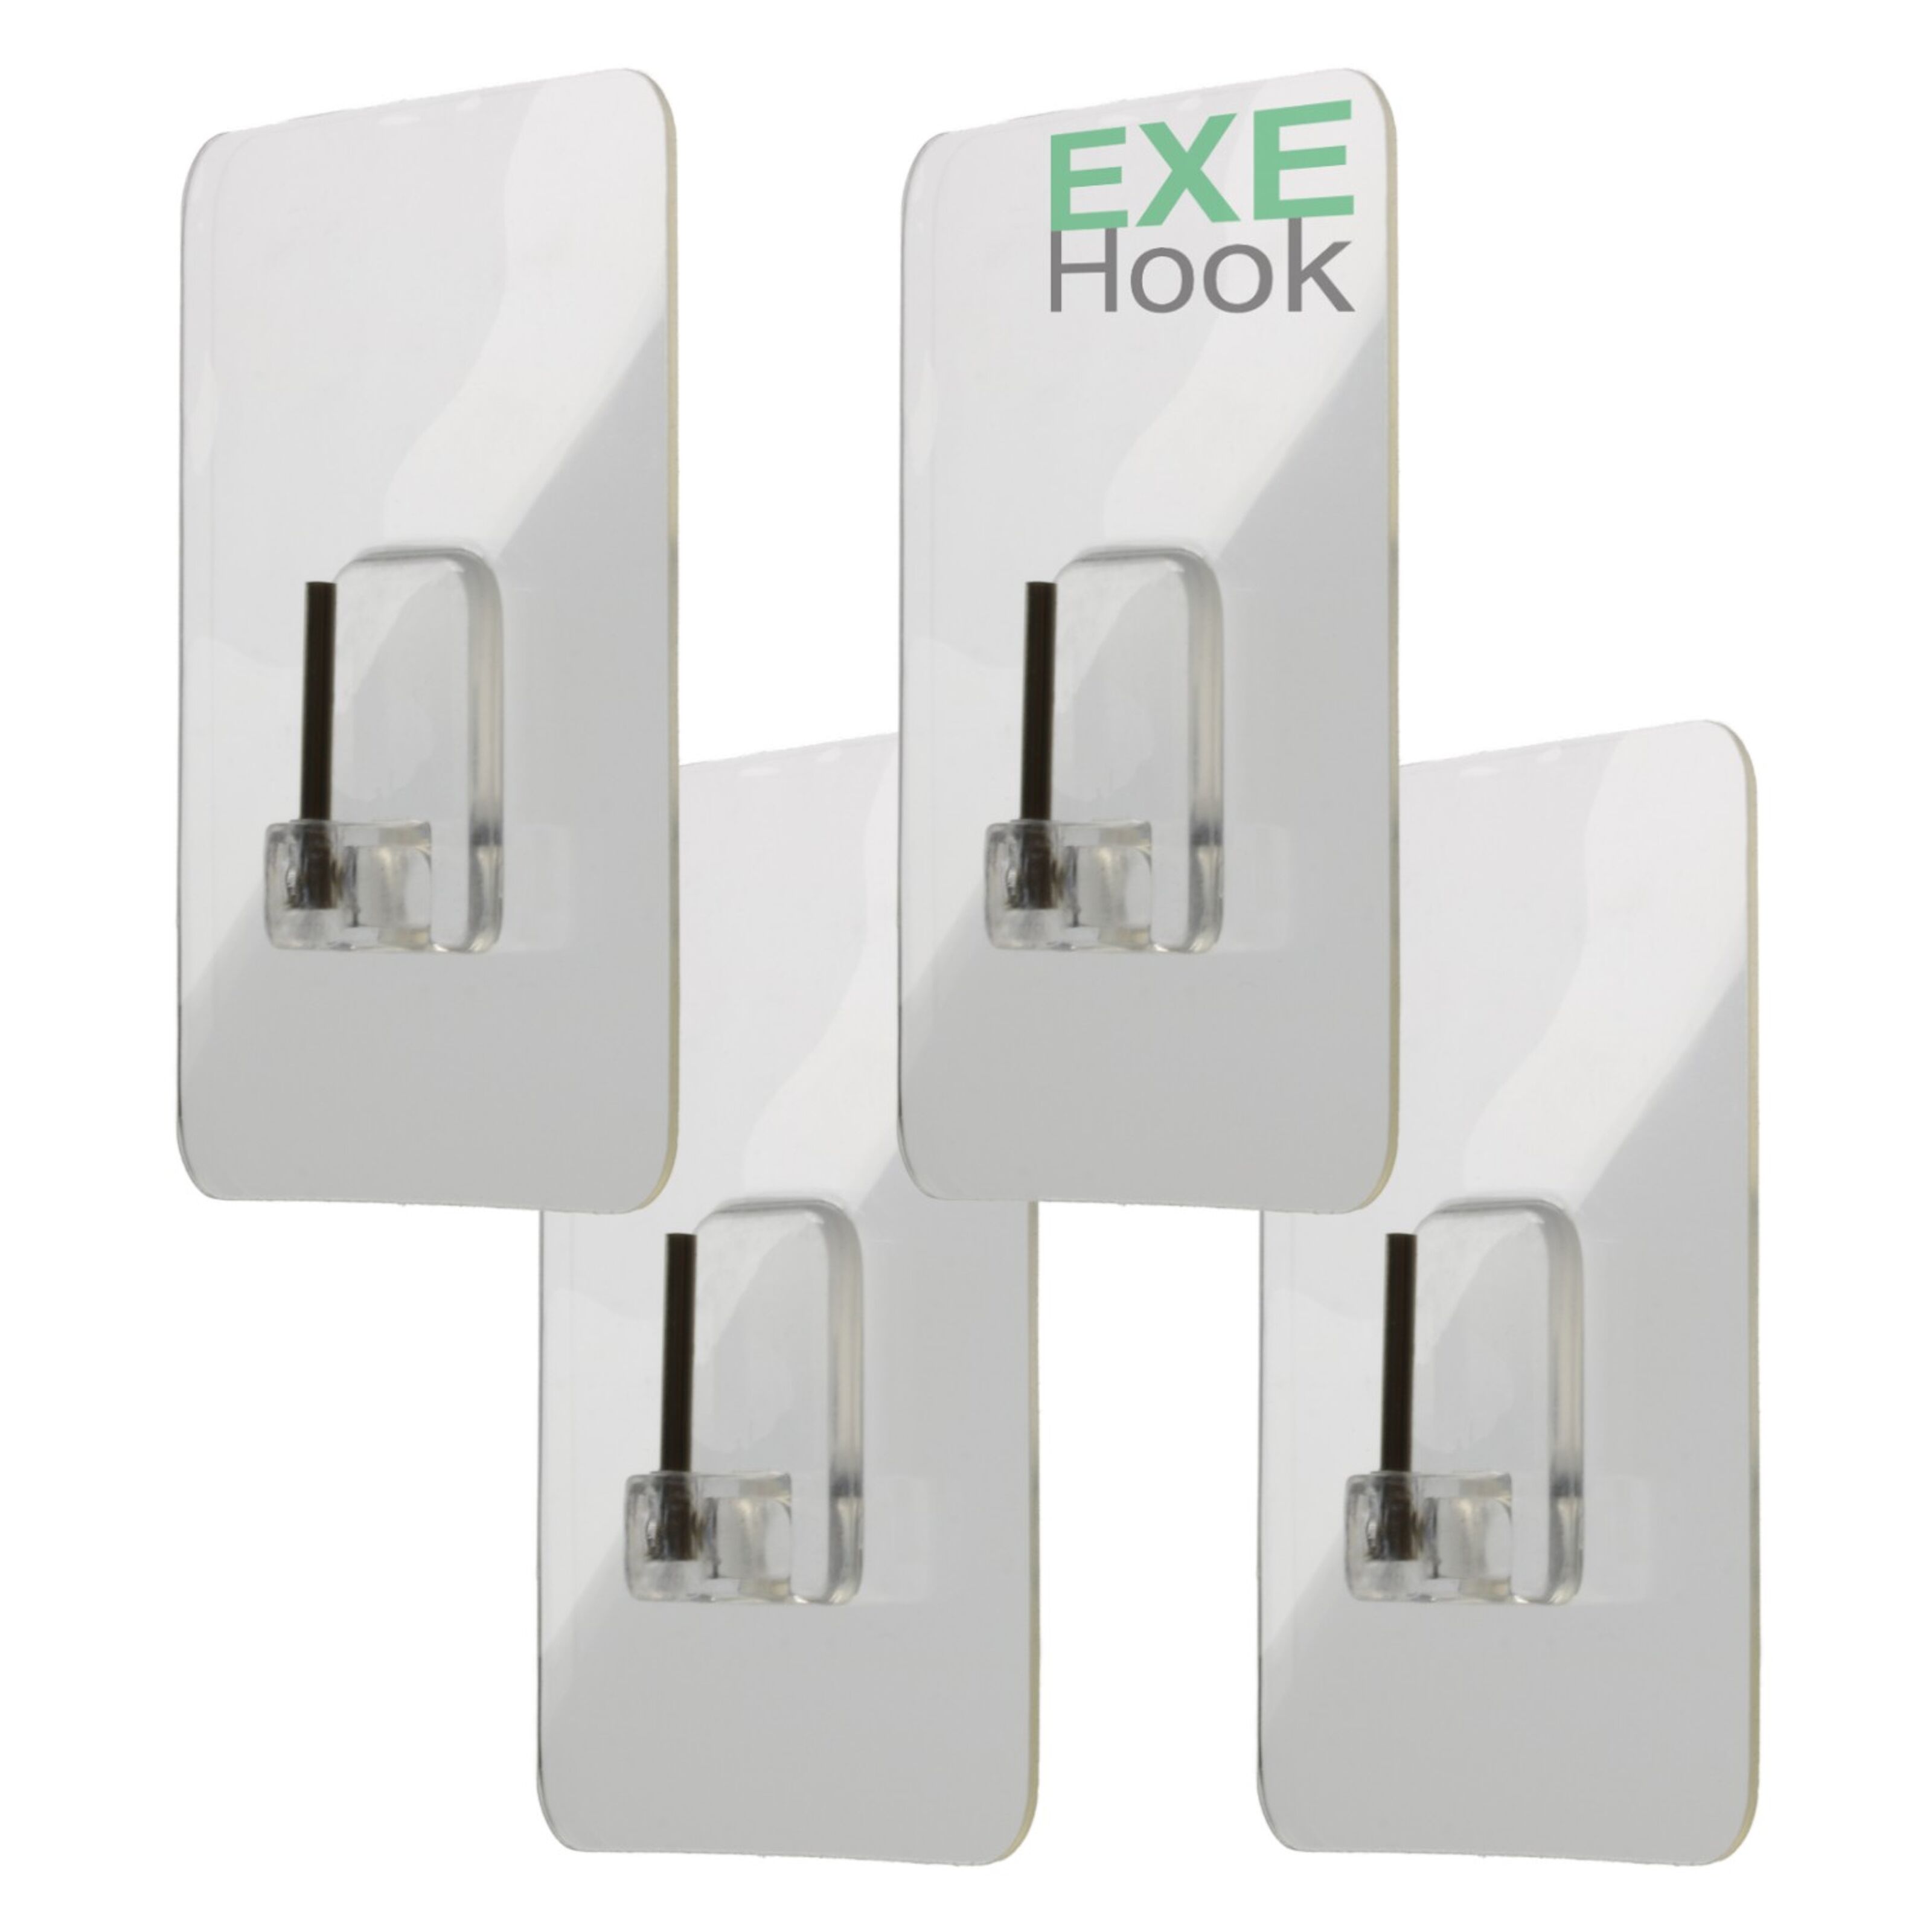 Buy wholesale 4x EXEHook the reusable adhesive hook 4Kg curtain rod hooks